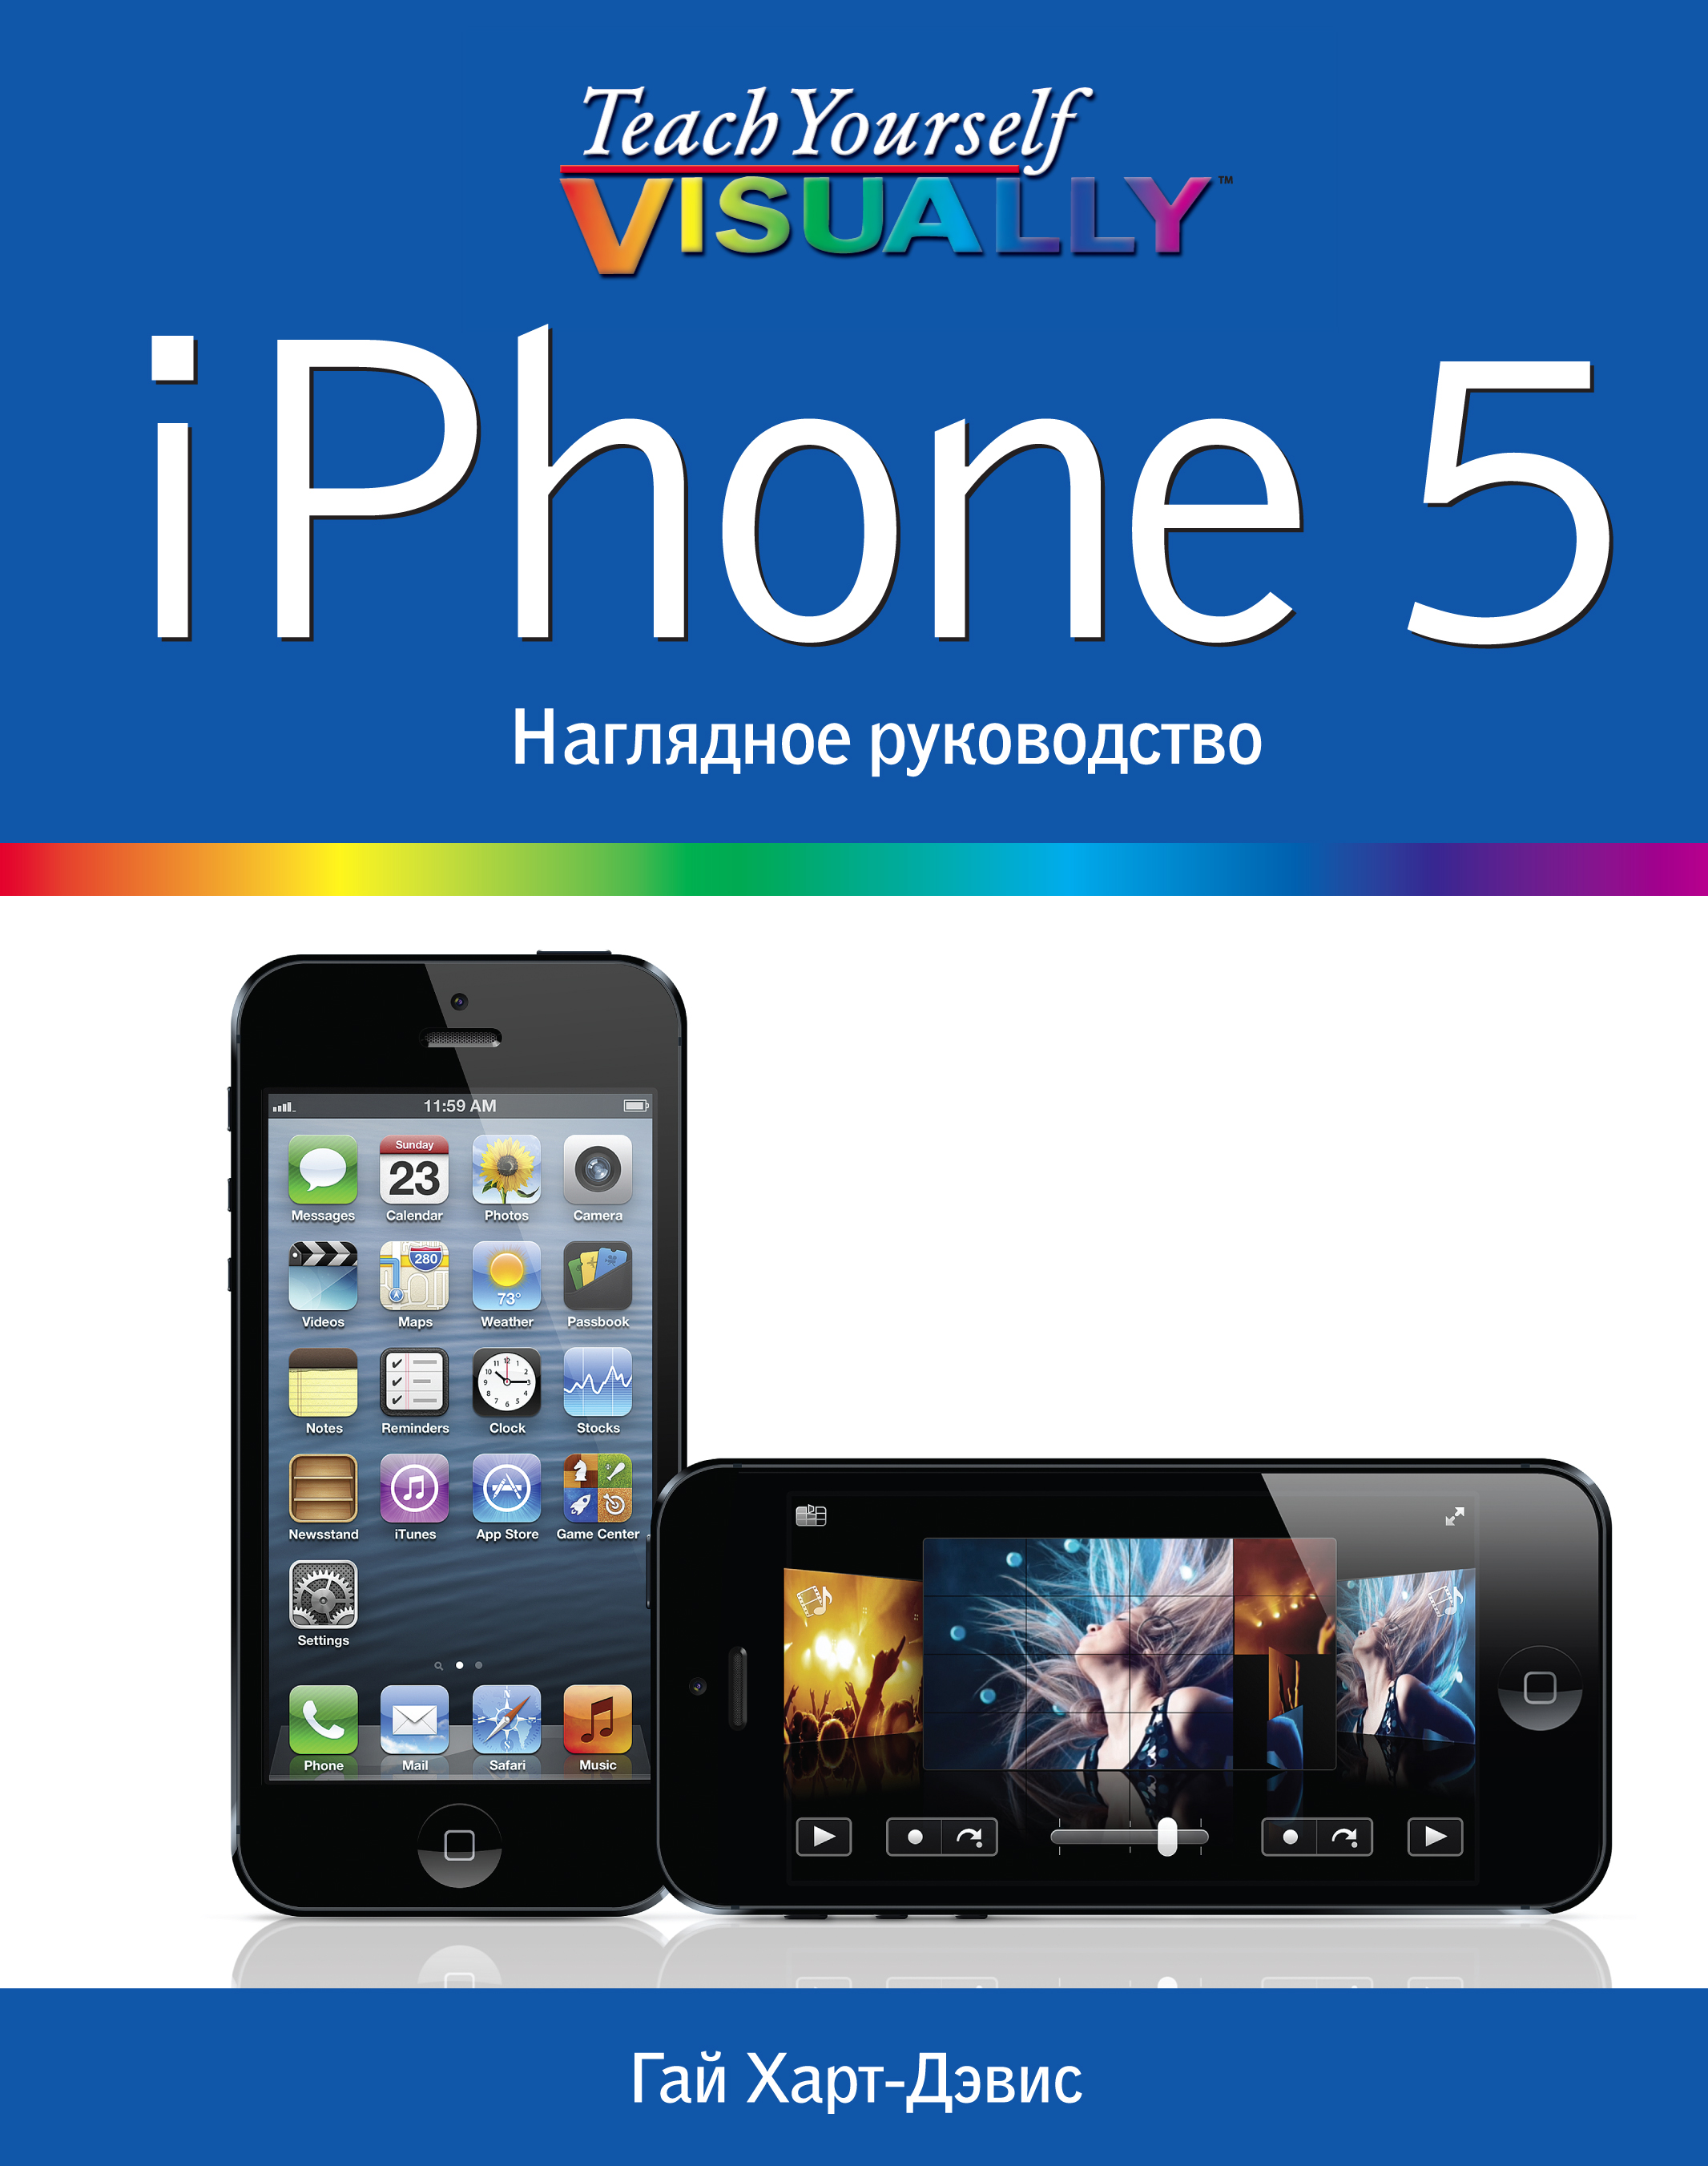 Харт-Дэвис Гай - iPhone 5. Наглядное руководство